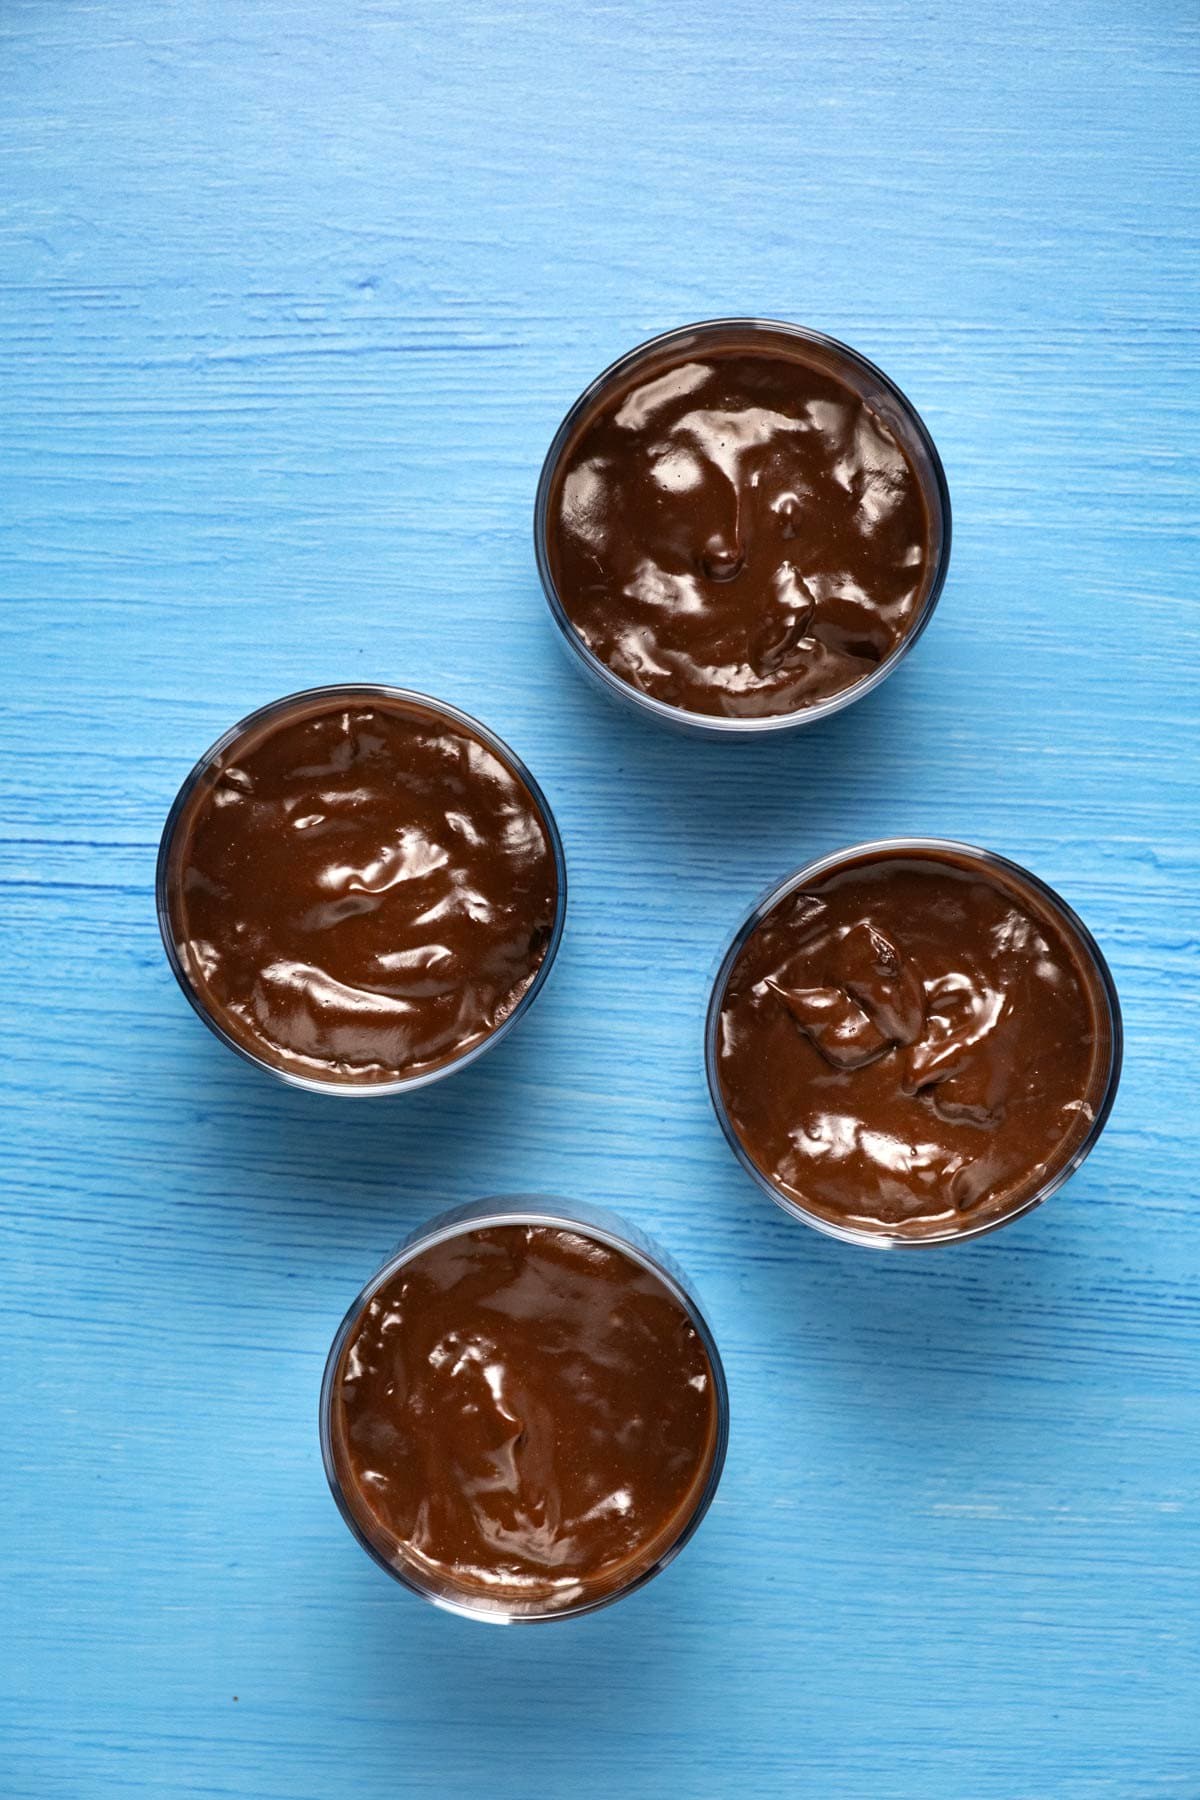 Vegan chocolate pudding in glass ramekins. 